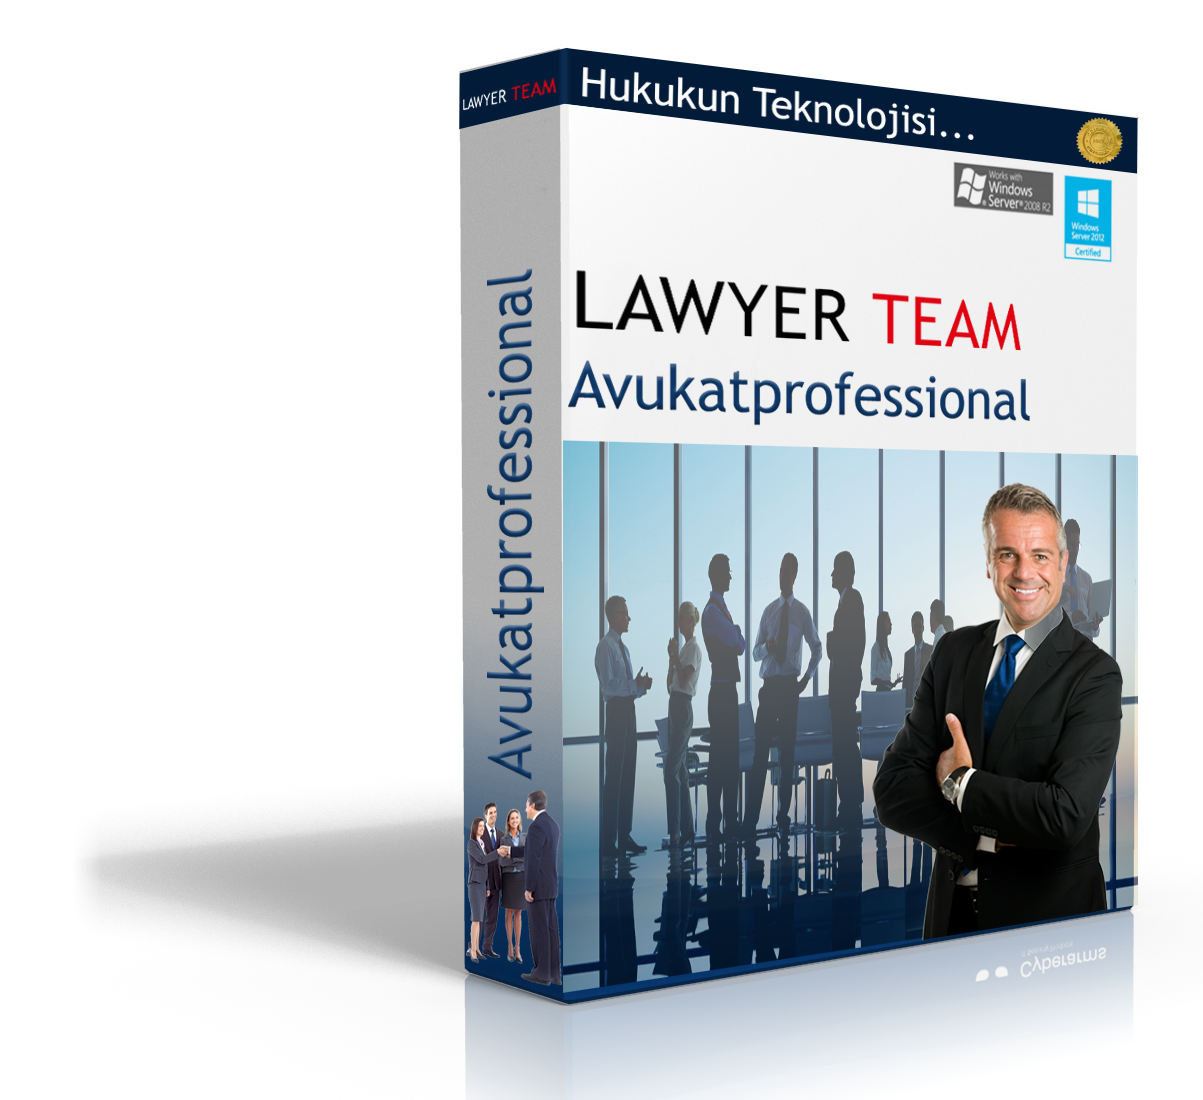 Lawyer Team Avukatprofessional